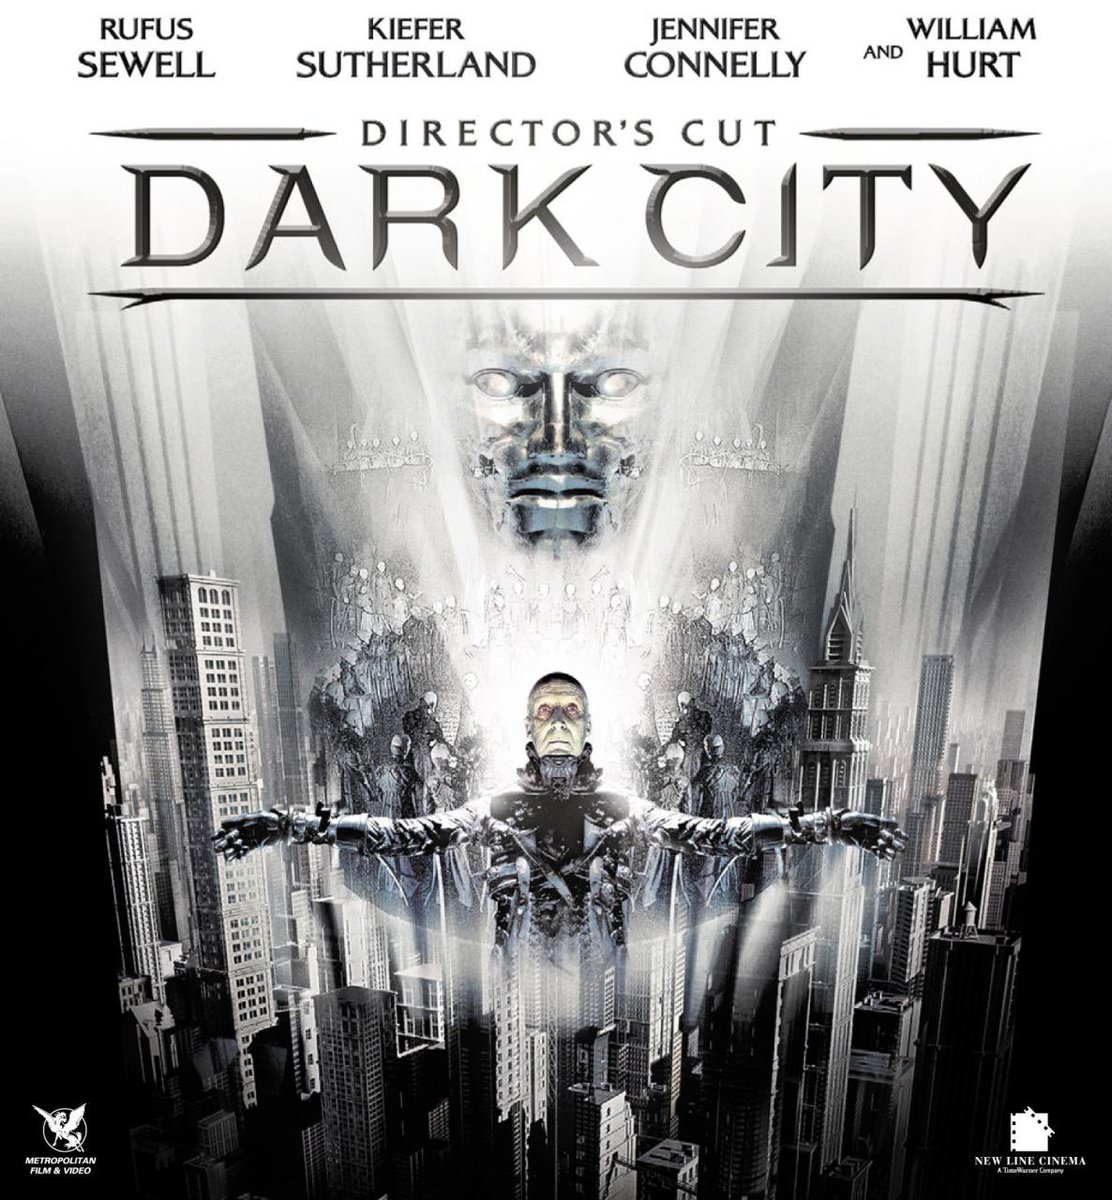 Now watching Dark City - 1998

#DarkCity #RufusSewell #JenniferConnelly #WilliamHurt #KieferSutherland #film #movie #AlexProyas #NowWatching